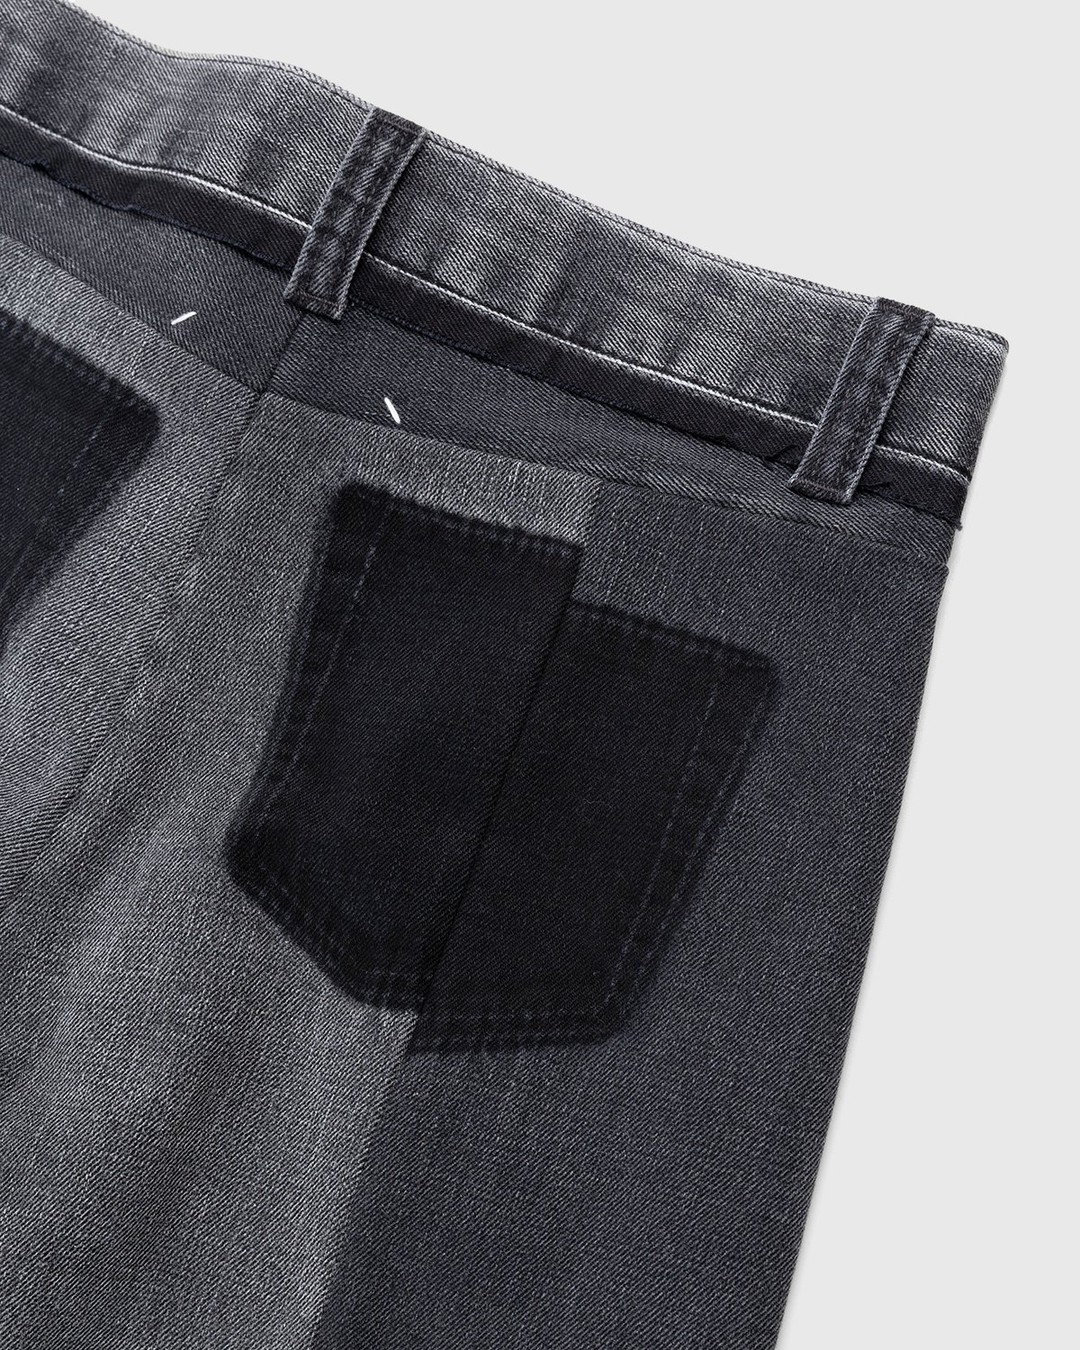 Maison Margiela – Spliced Jeans Black - Denim - Black - Image 7